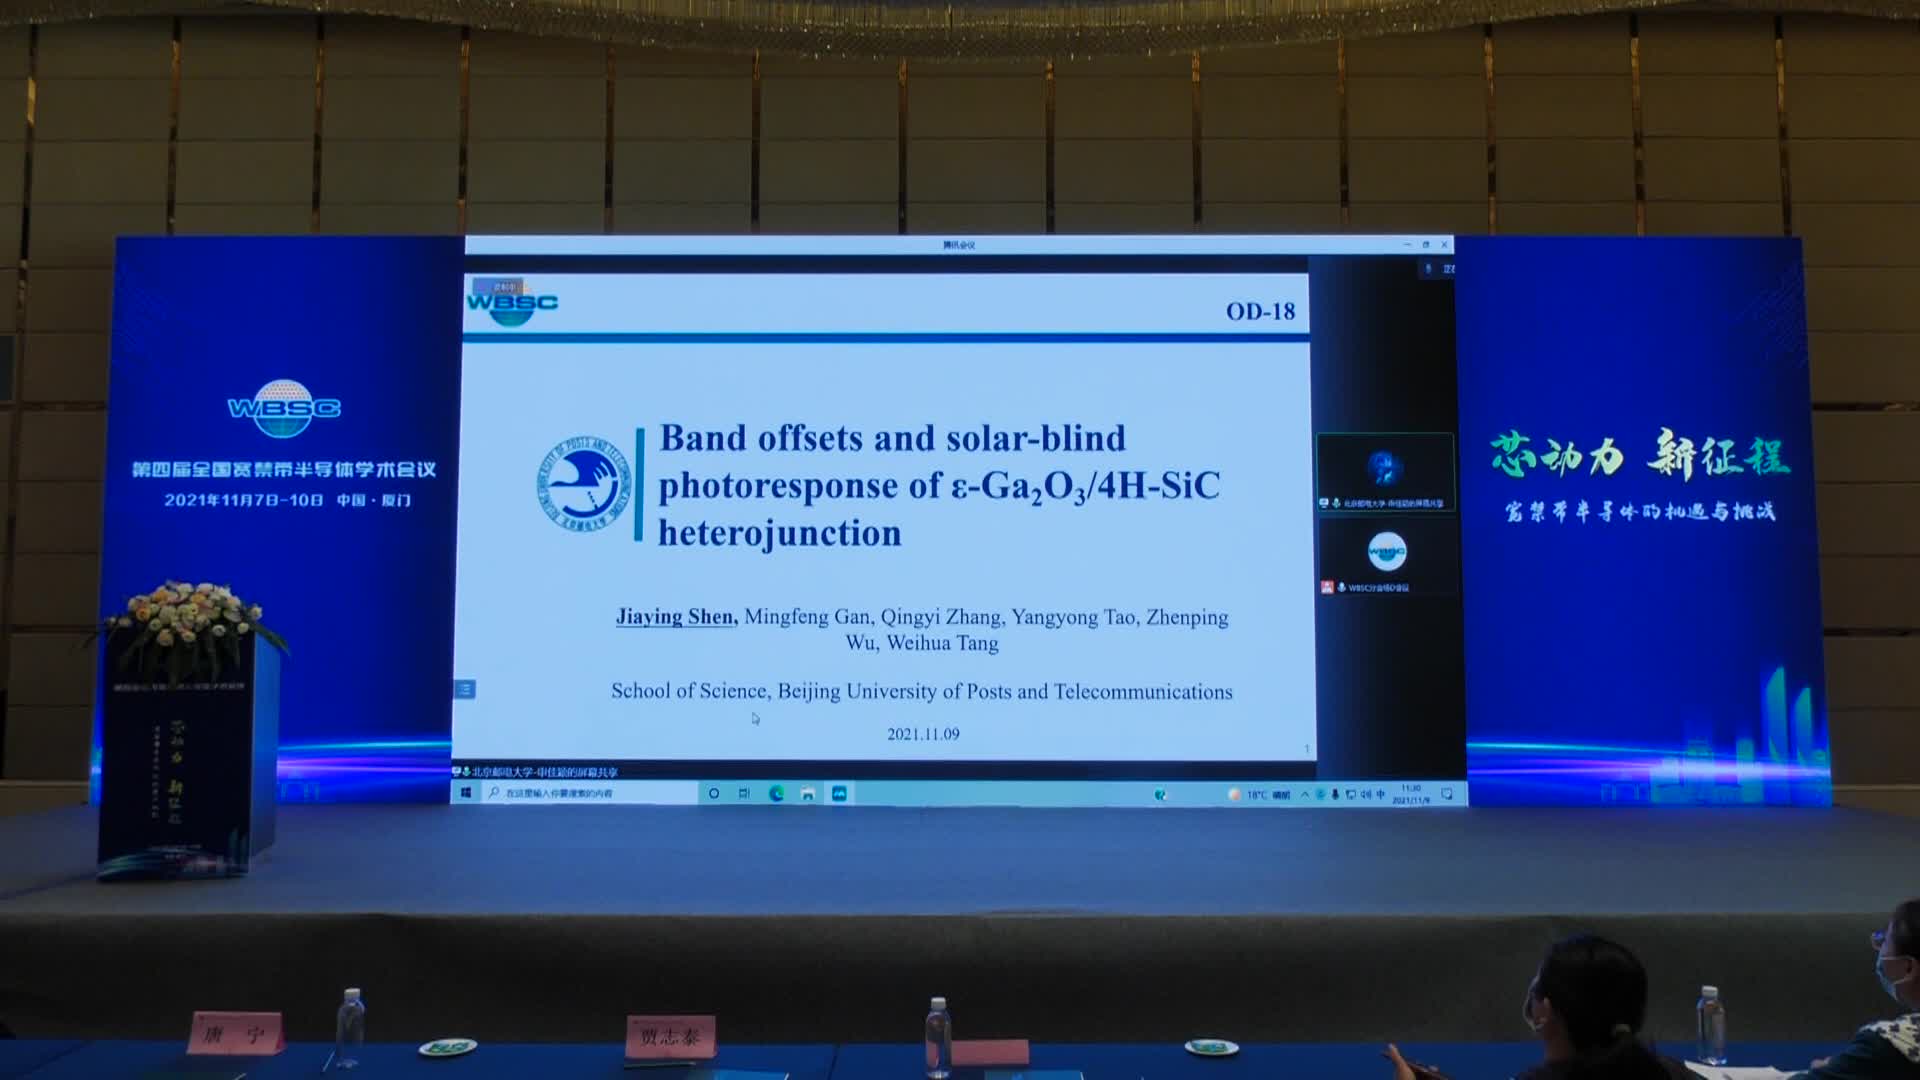 Jiaying Shen: Band offsets and solar-blind photoresponse of ε-Ga2O3/4H-SiC heterojunction